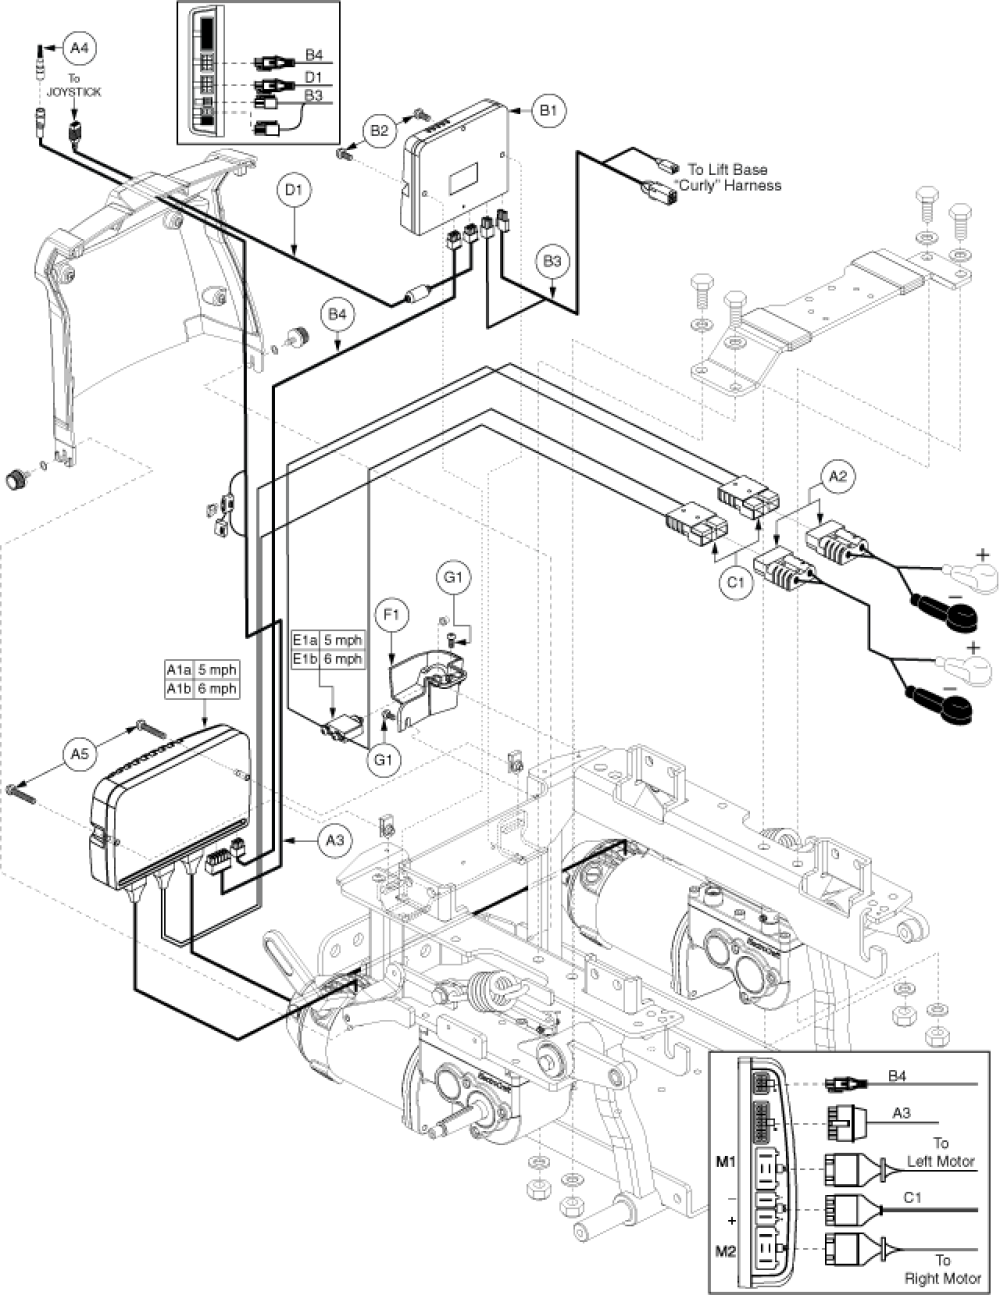 Q-logic Electronics parts diagram